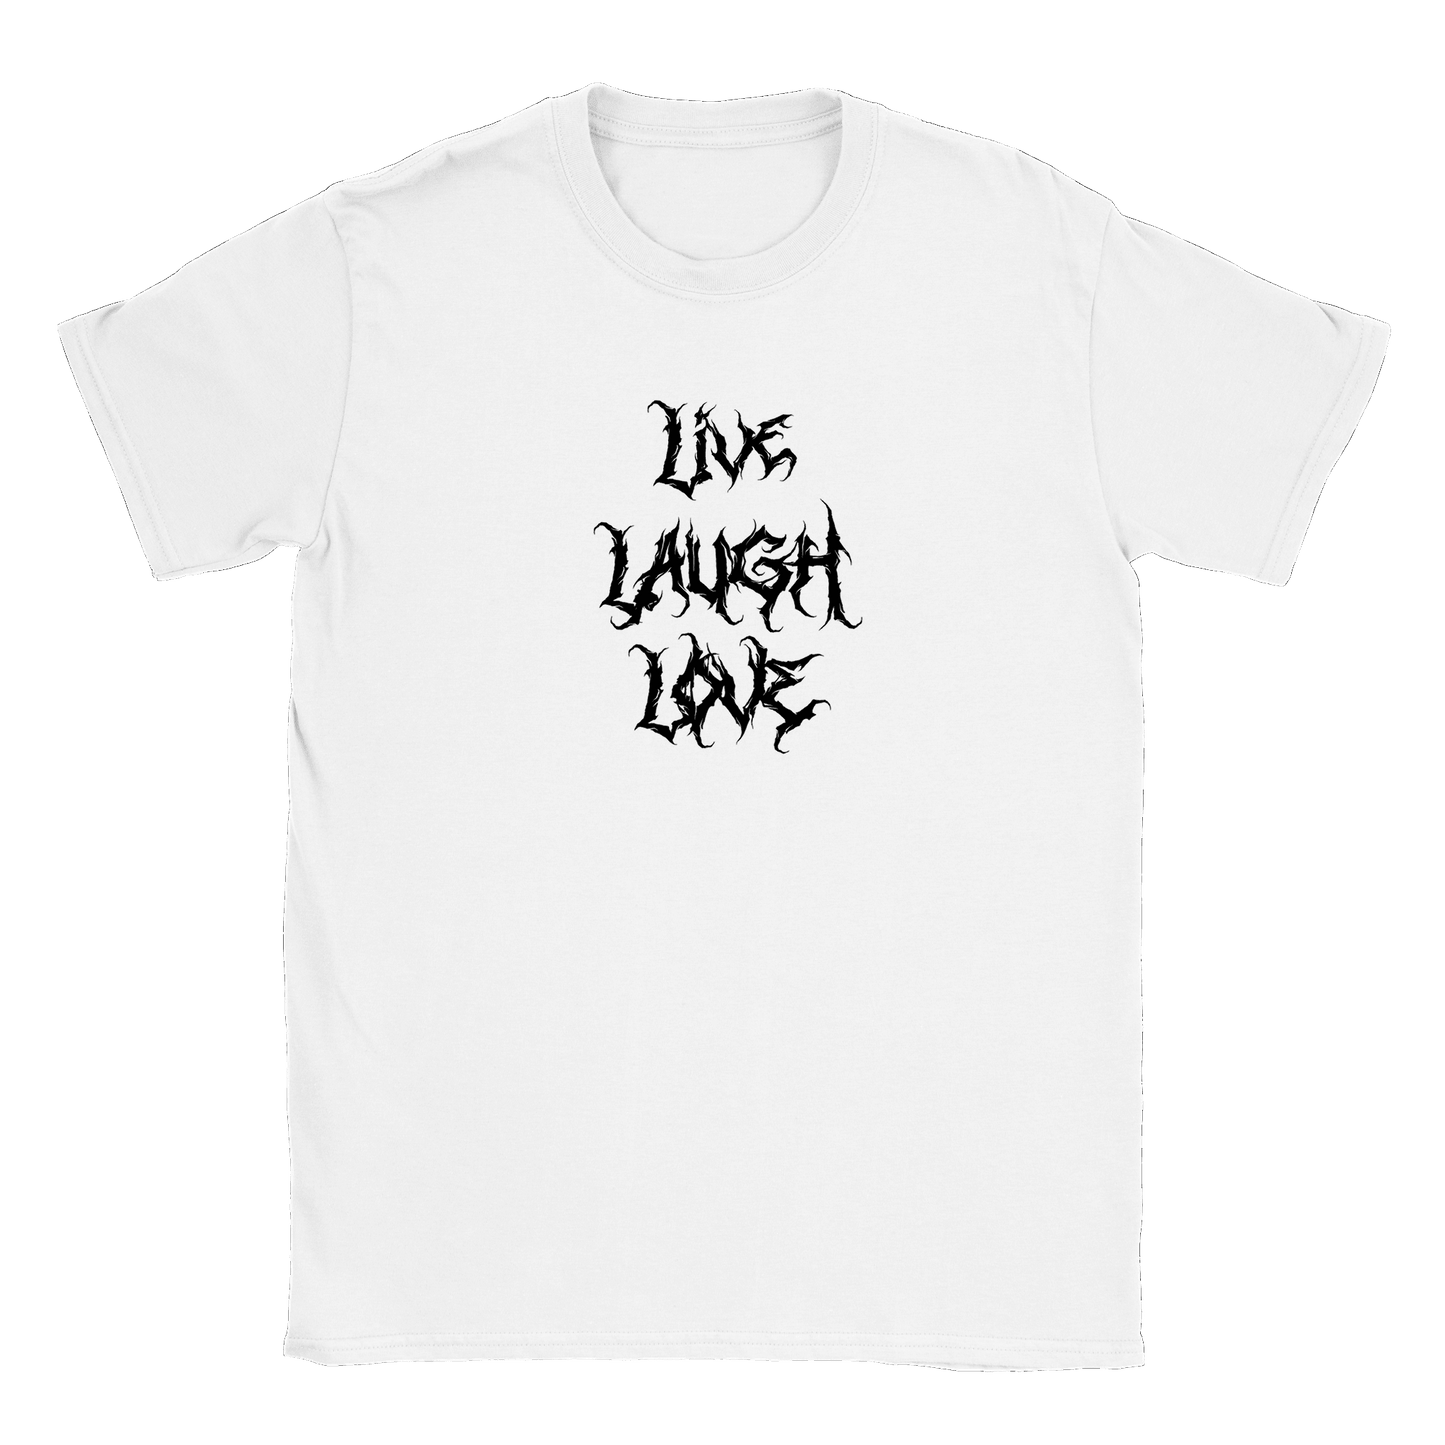 Live Laugh Love - T-shirt Vit